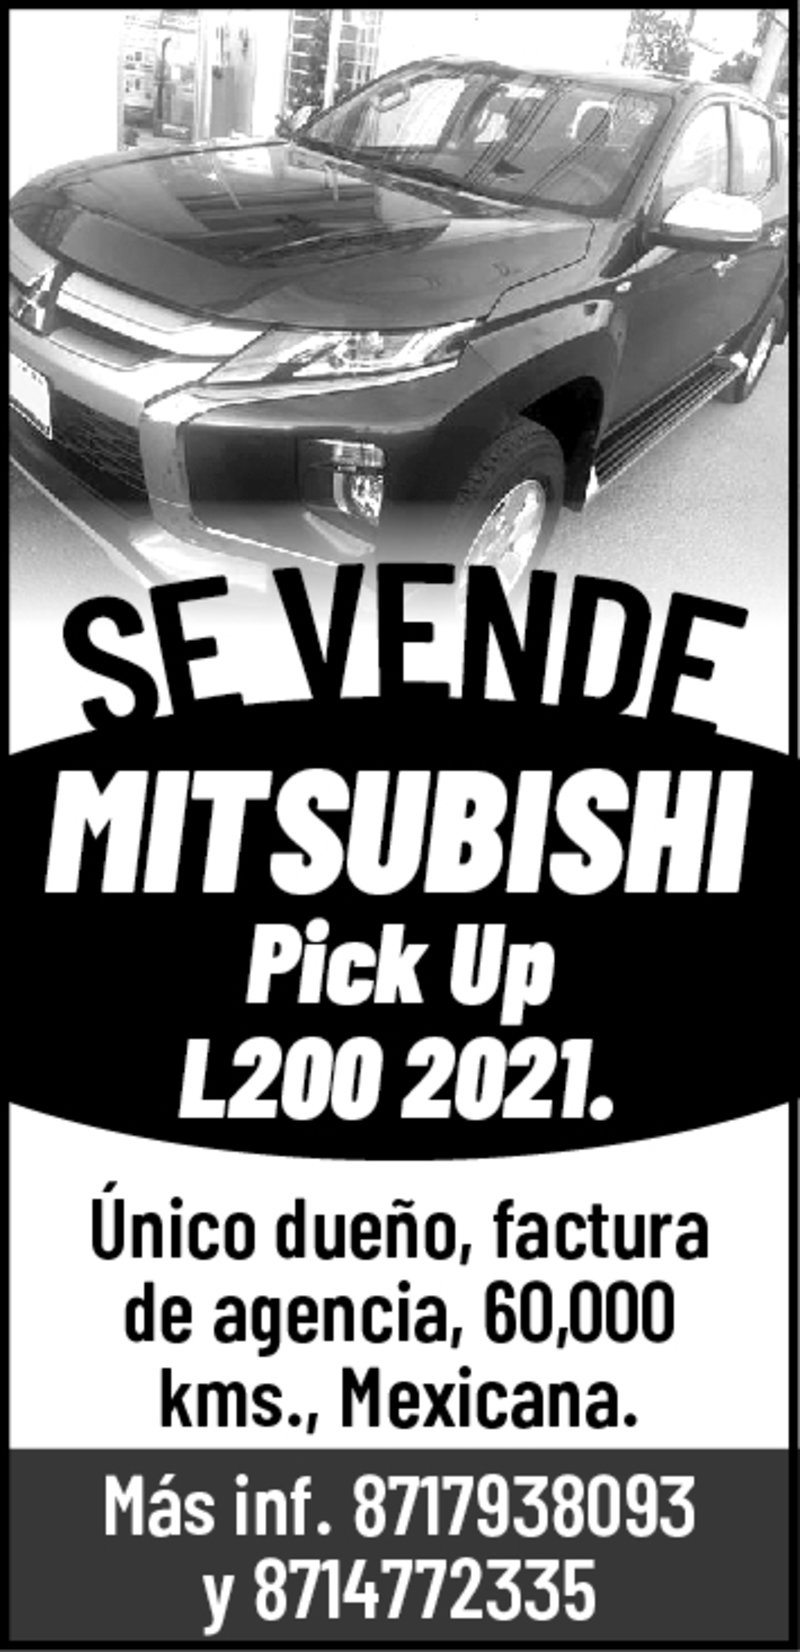 MitsubishiPickUpL2002021